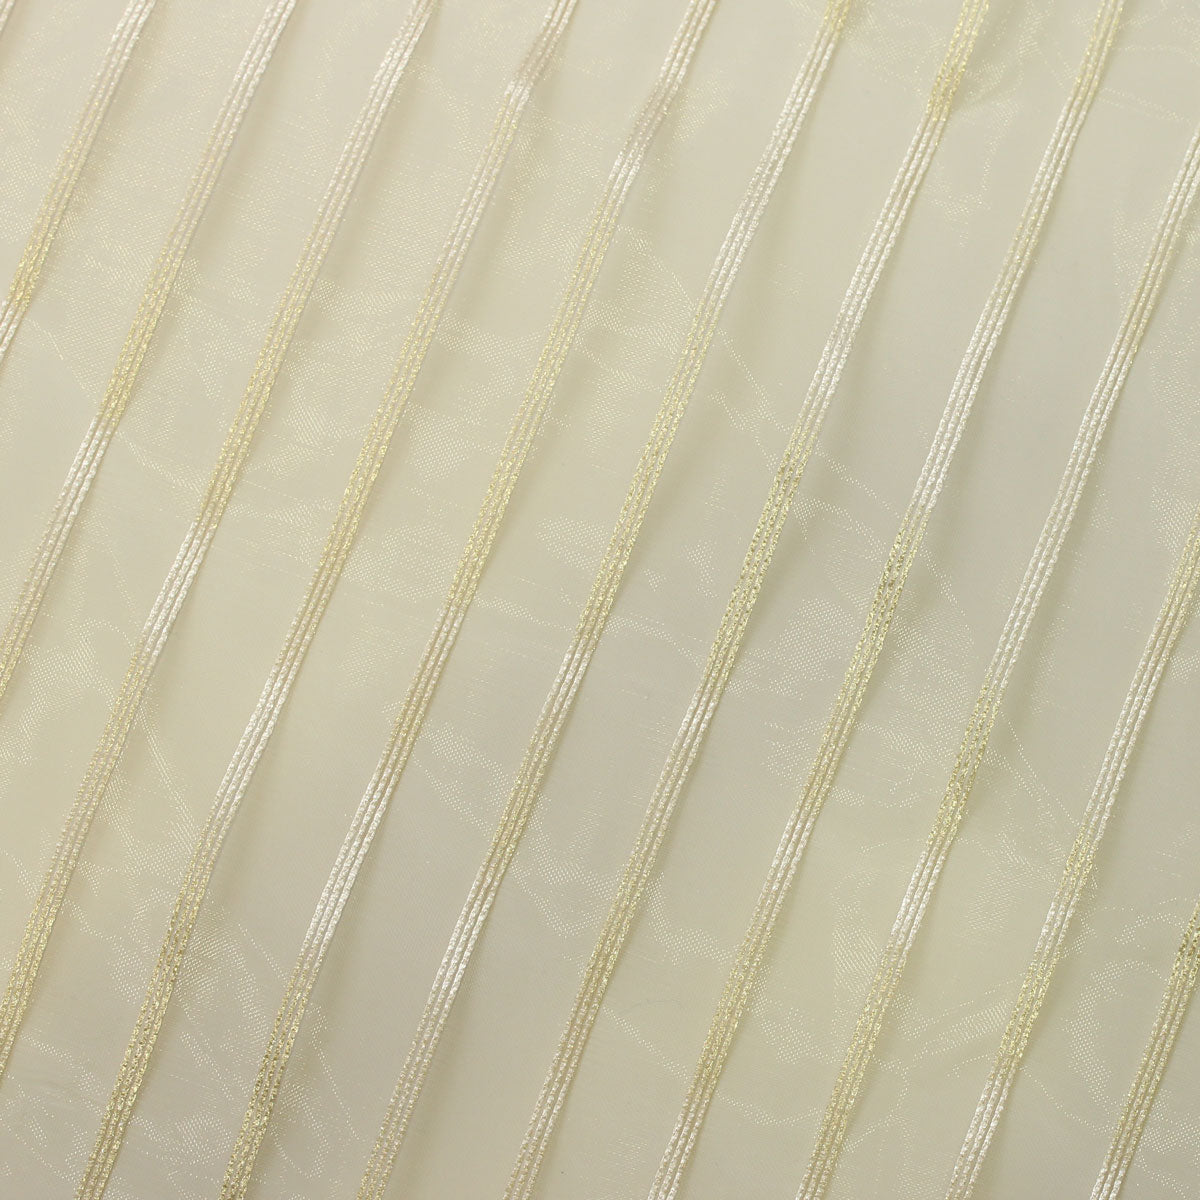 Ivory Striped Able Sheer Drapery Home Decor Fabric - Fashion Fabrics Los Angeles 